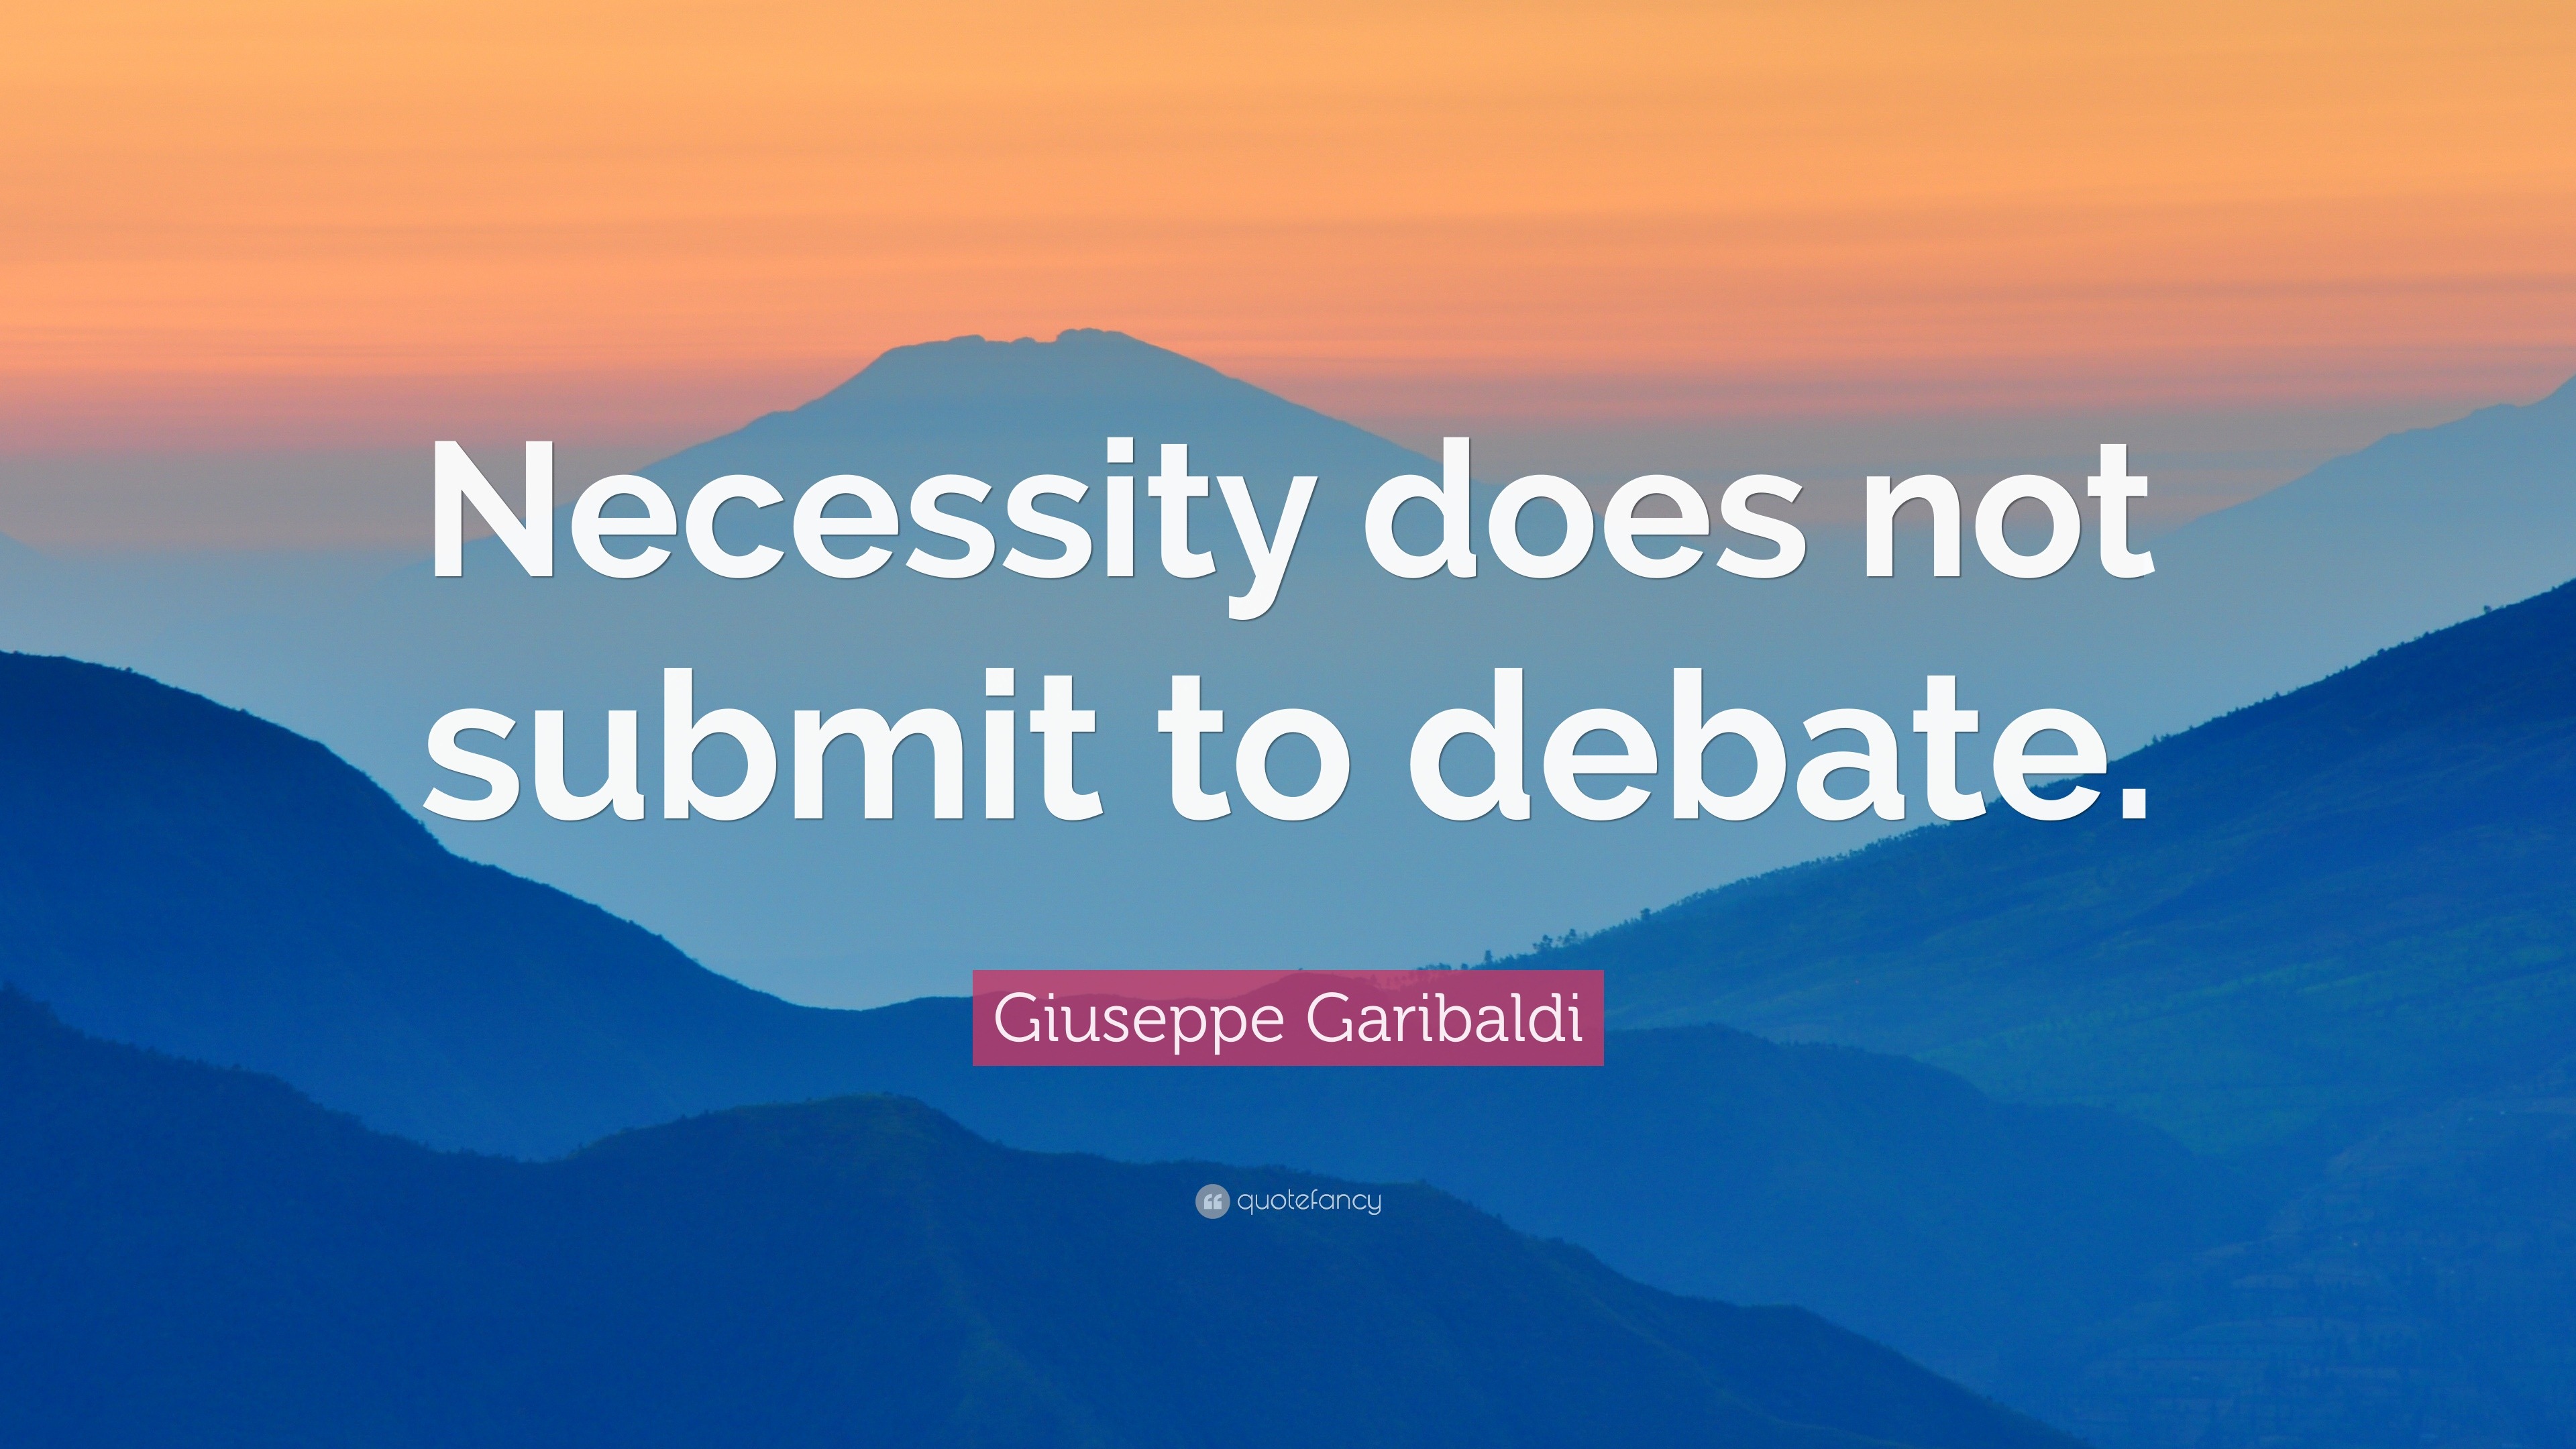 Giuseppe Garibaldi Quotes (17 wallpapers) - Quotefancy